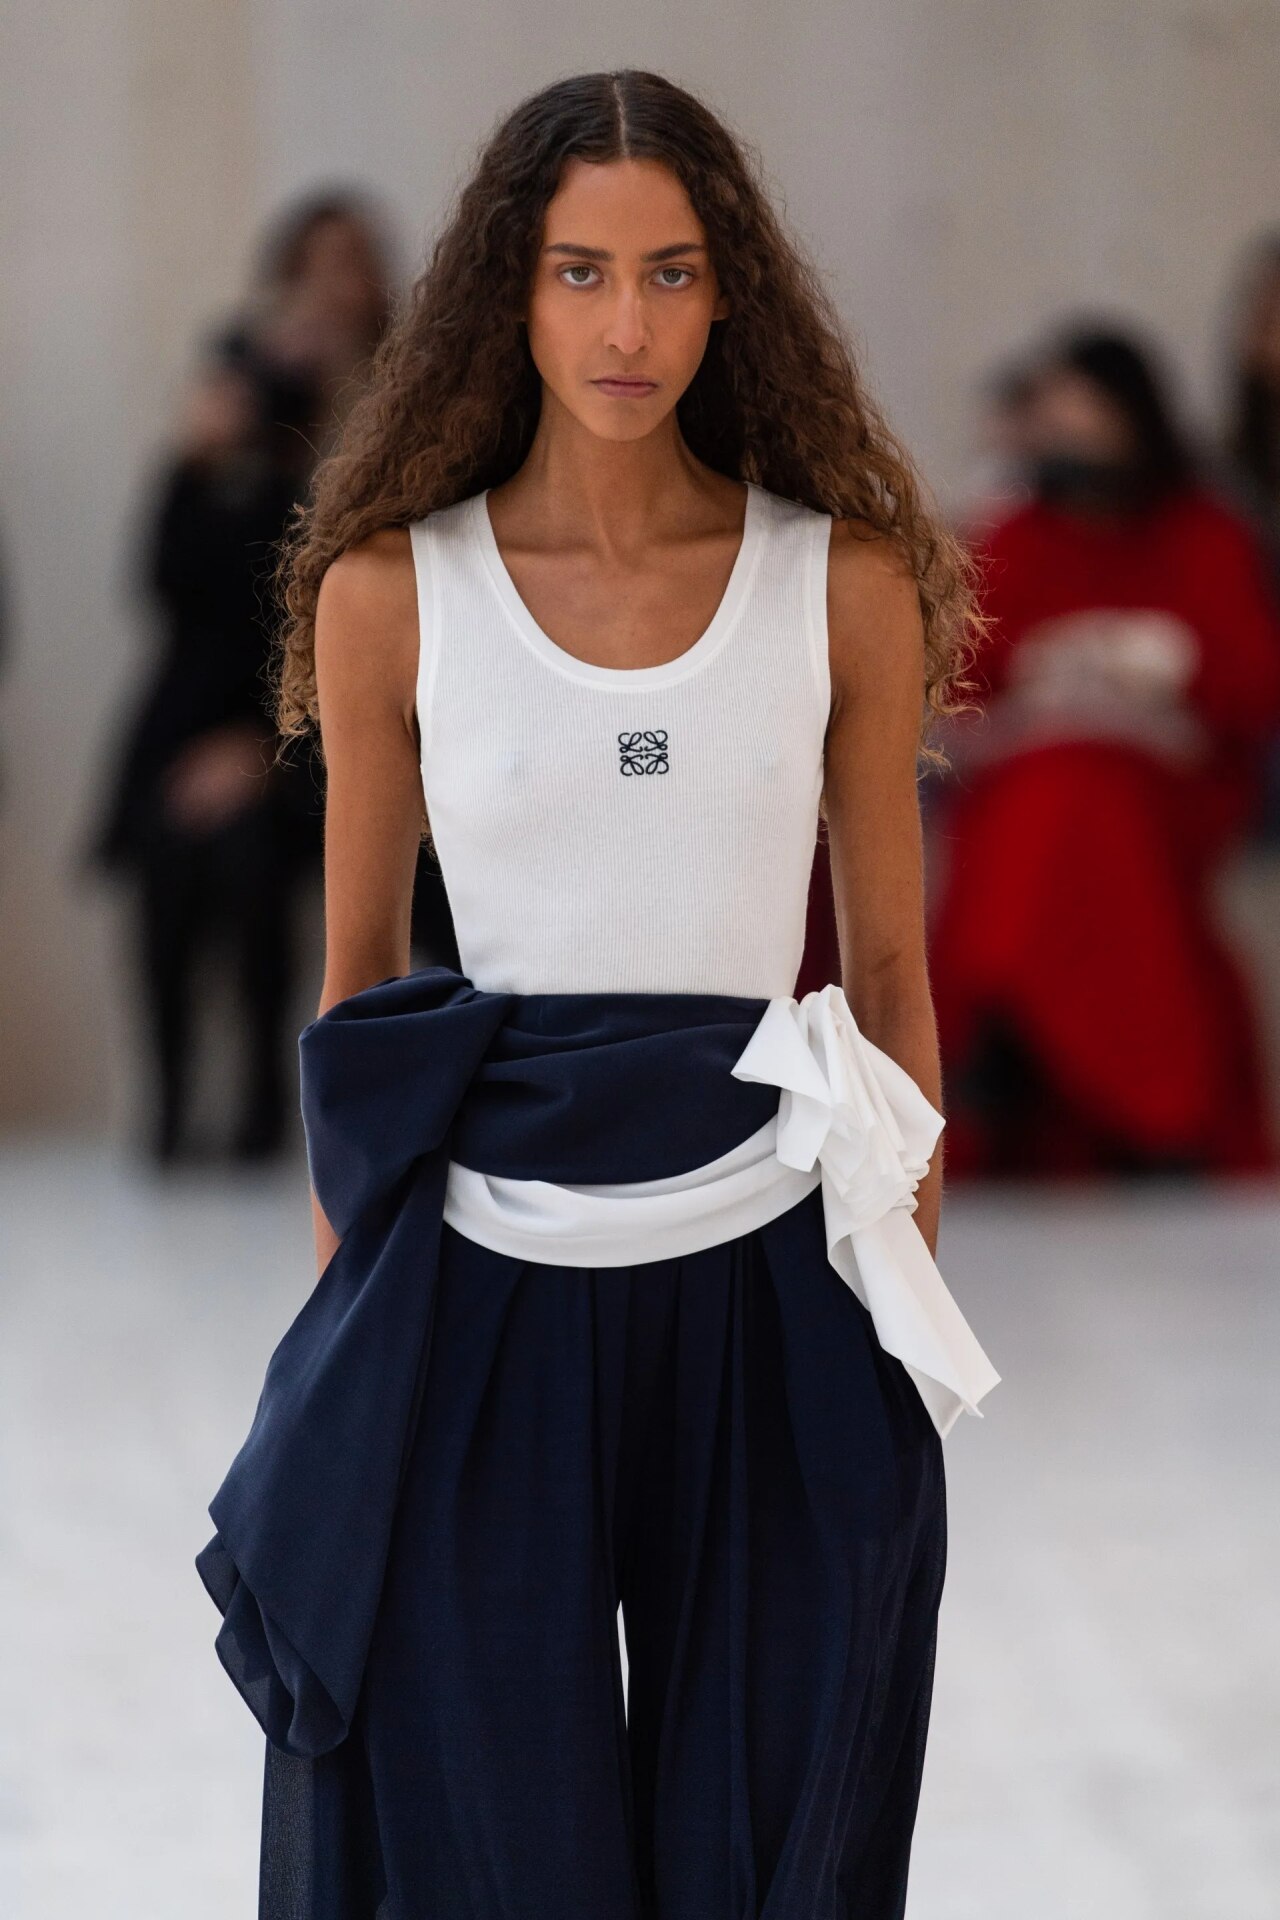 Designer Marc Jacobs reportedly bagging Louis Vuitton